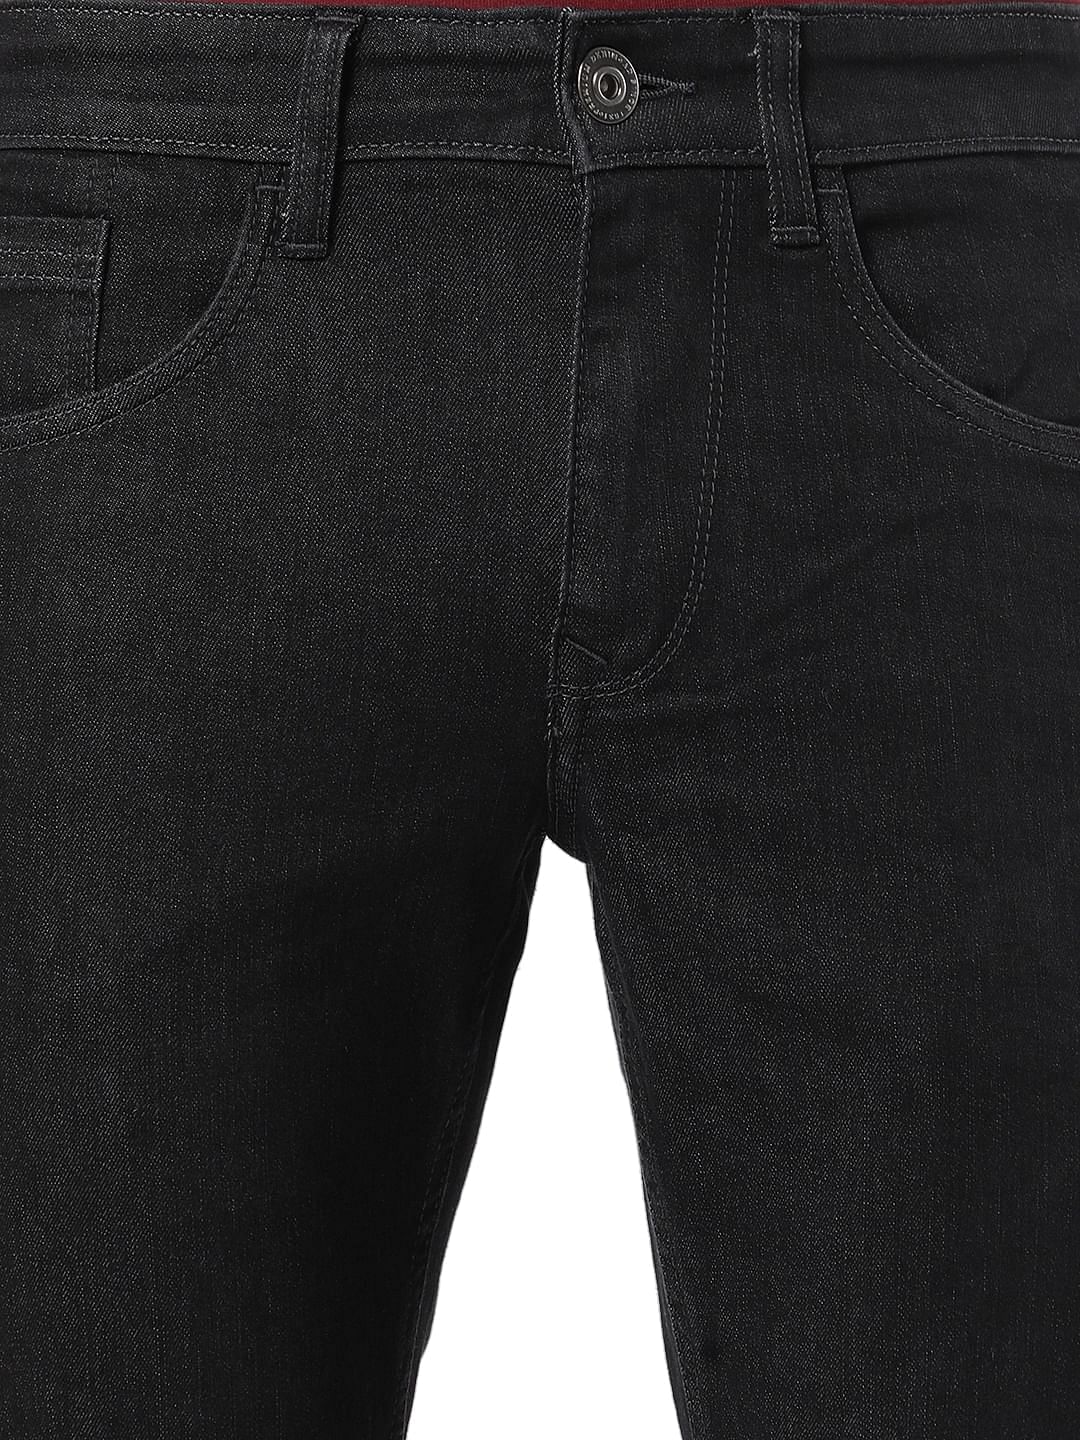 RUSTLER black jeans – lesflaneuses